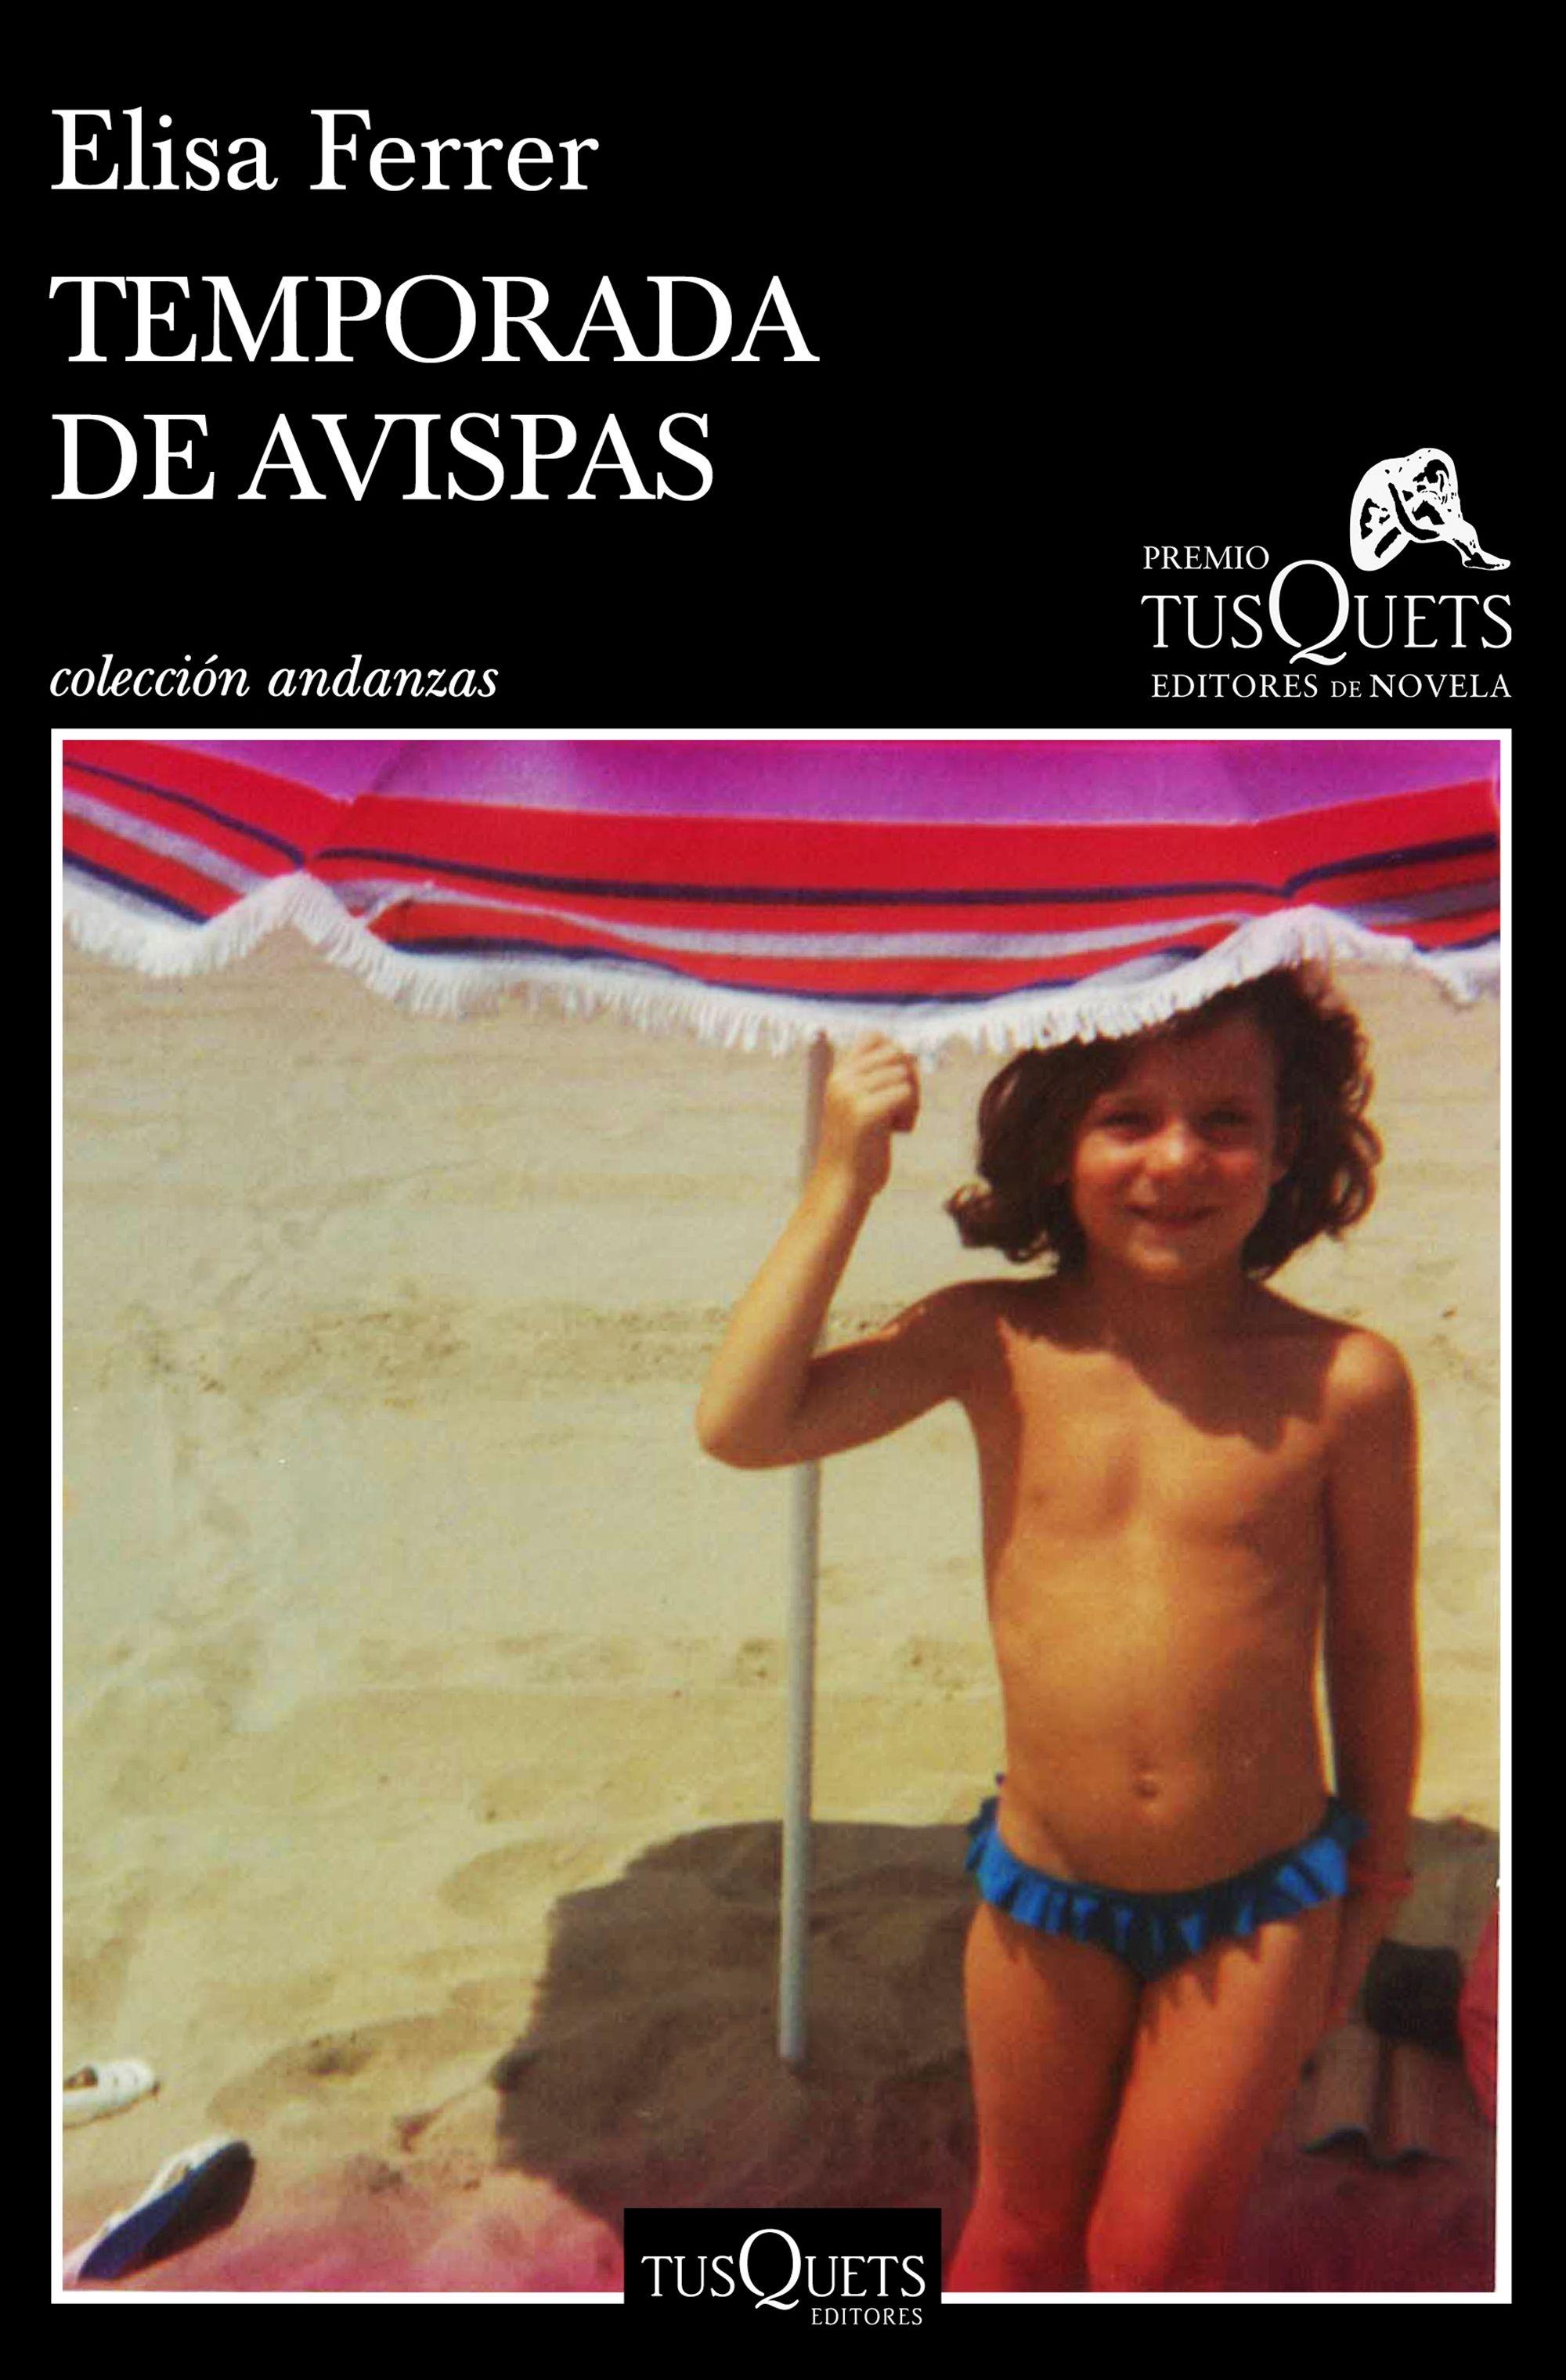 Temporada de Avispas "Xv Premio Tusquets Editores de Novela 2019"